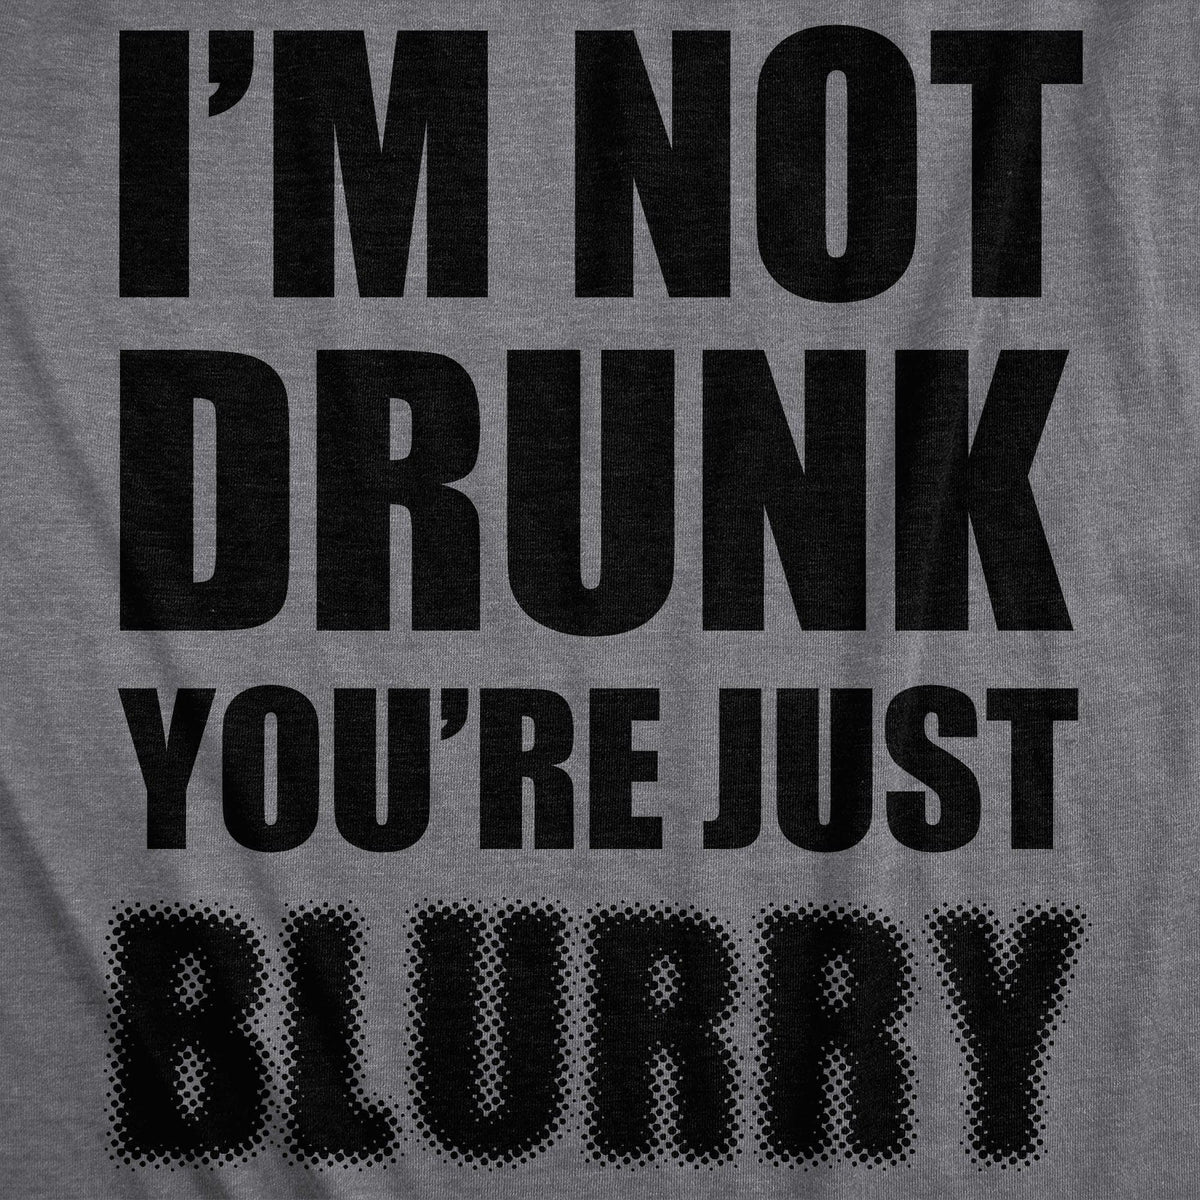 I&#39;m Not Drunk You&#39;re Just Blurry Men&#39;s Tshirt  -  Crazy Dog T-Shirts